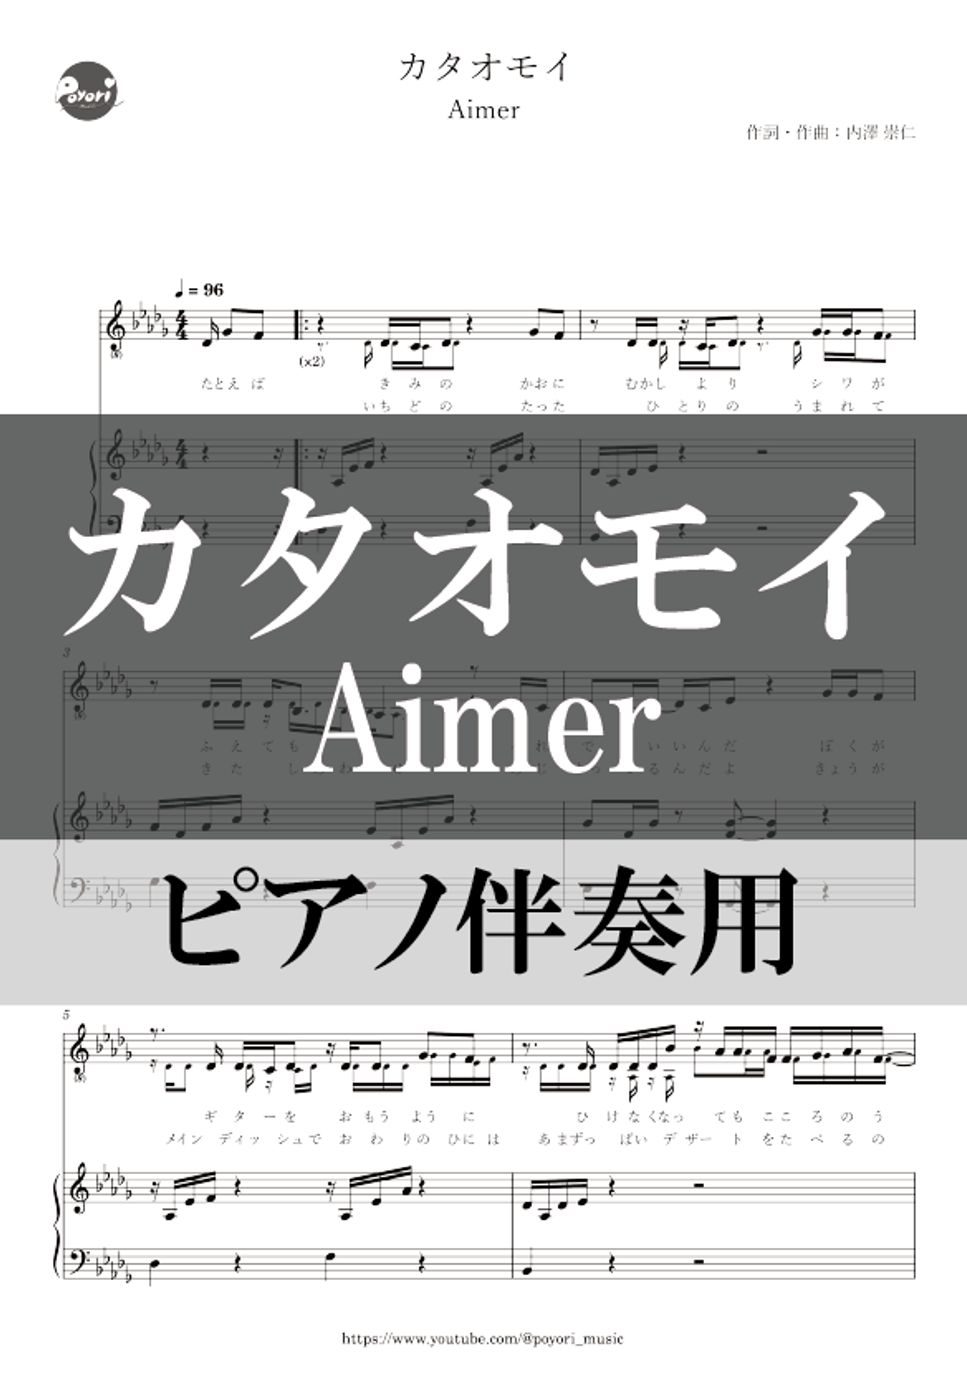 Aimer - カタオモイ (ピアノ伴奏) by poyori